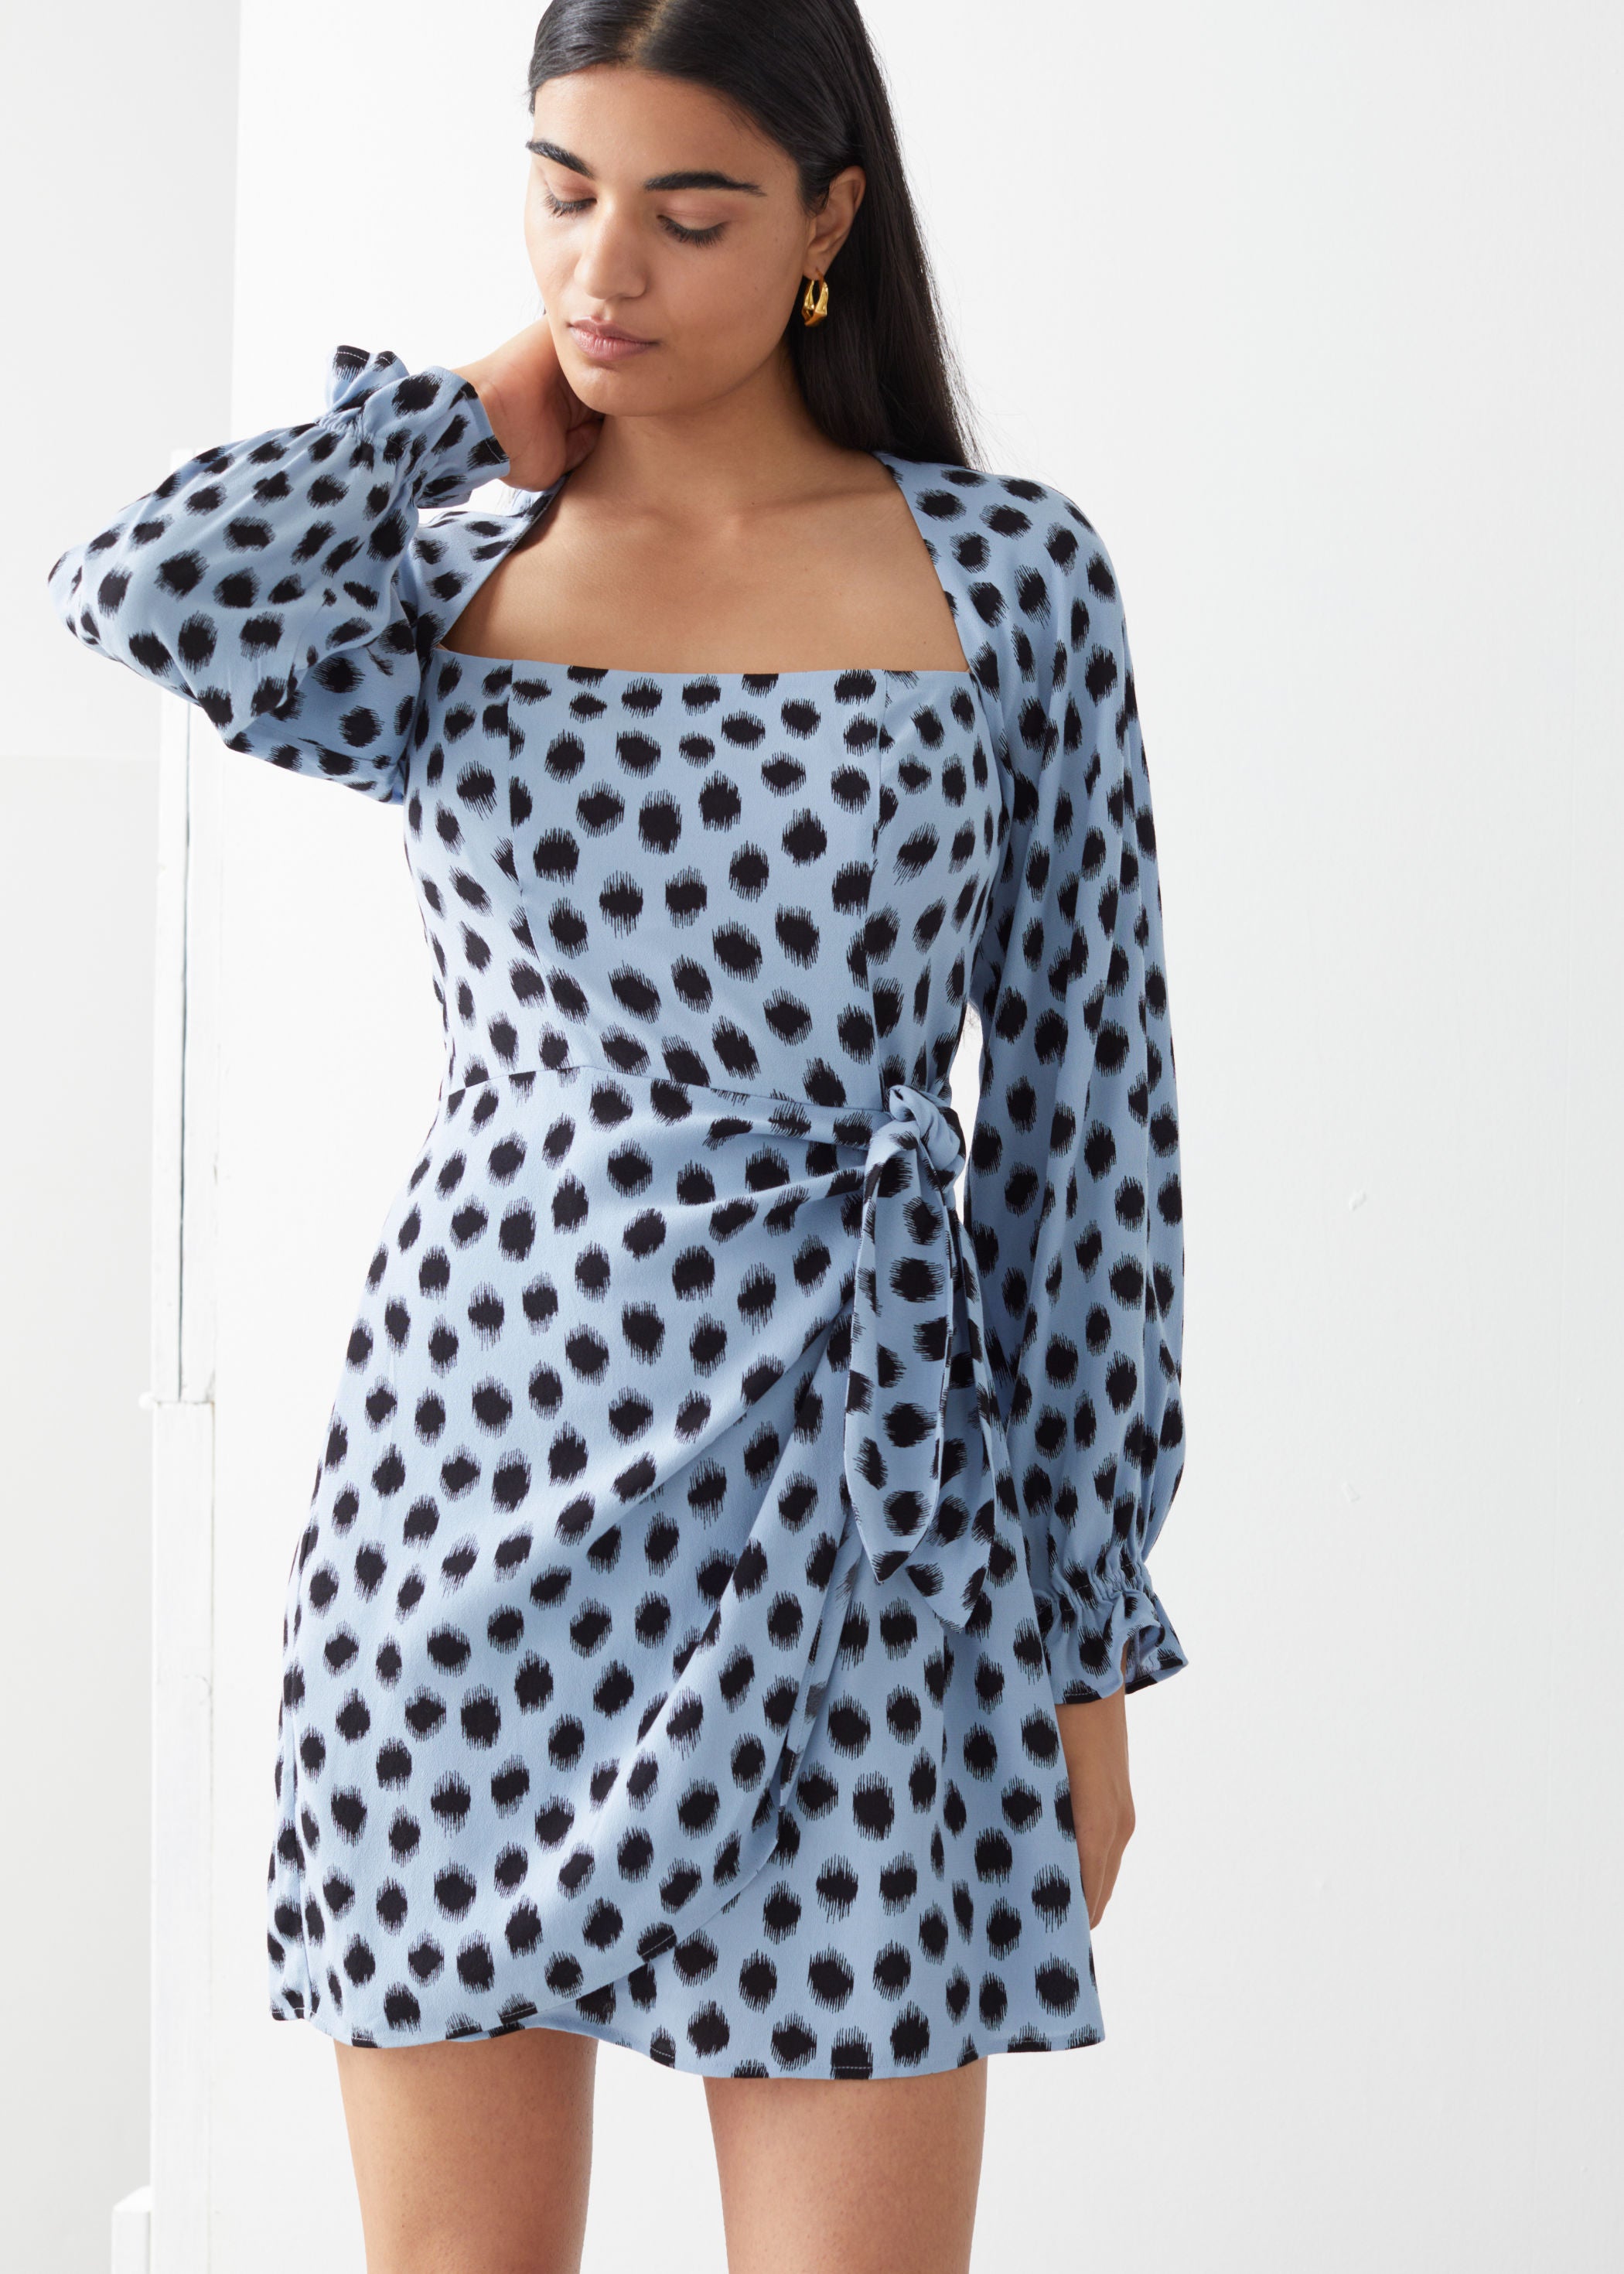 leopard print flowy dress